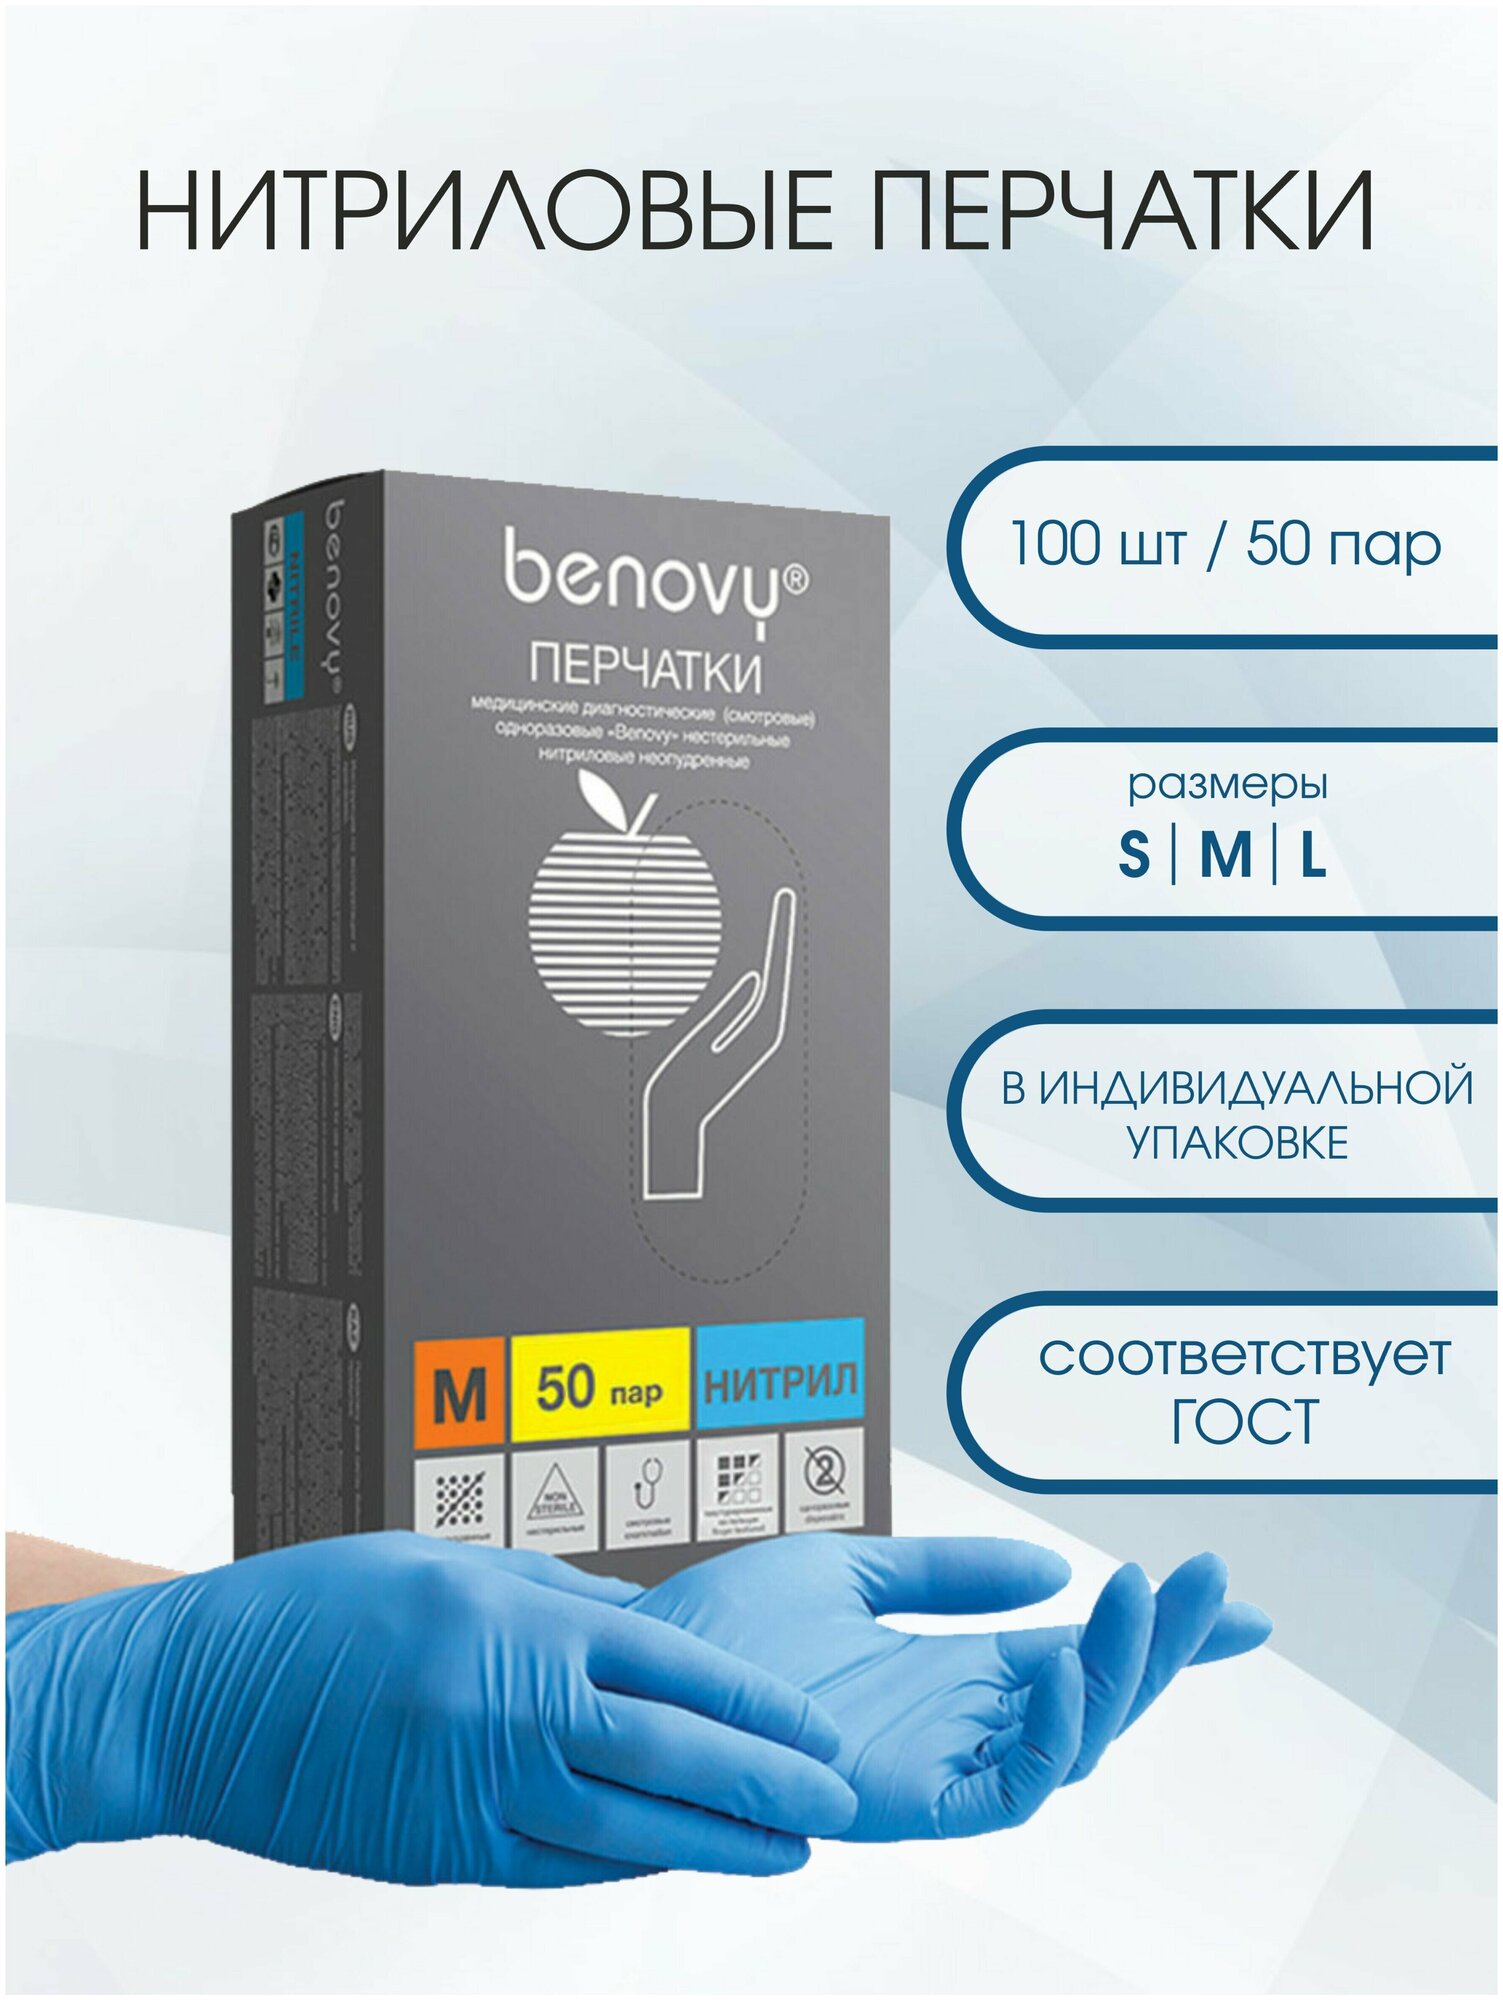    Benovy (), ,  S, 100 /50 , , 